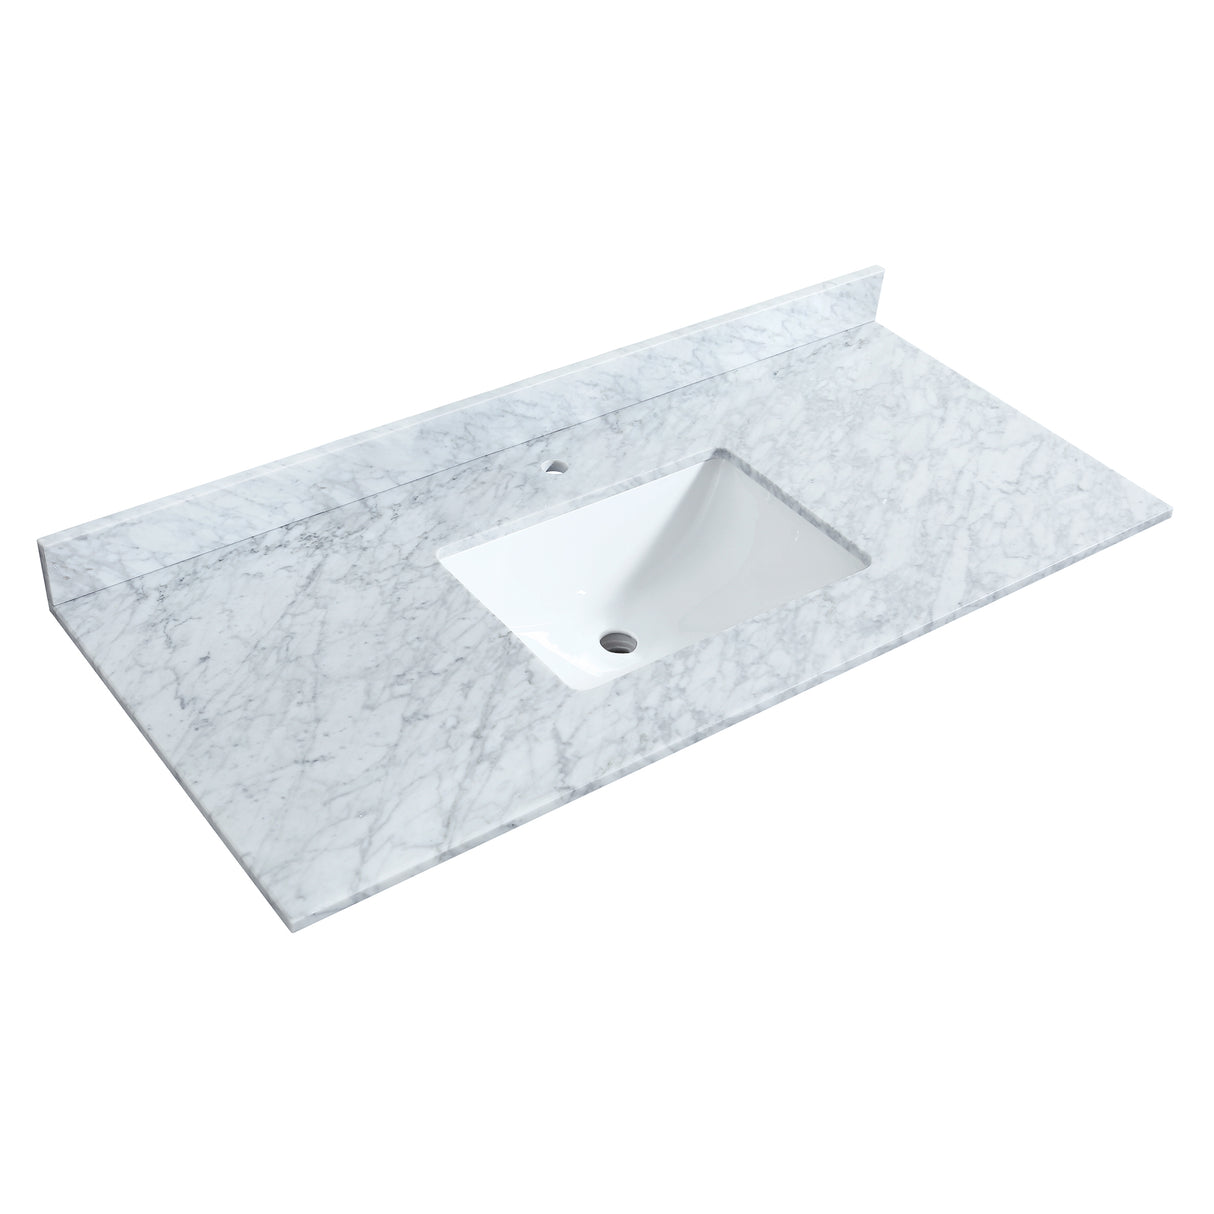 Daria 48 Inch Single Bathroom Vanity in Dark Gray White Carrara Marble Countertop Undermount Square Sink Matte Black Trim